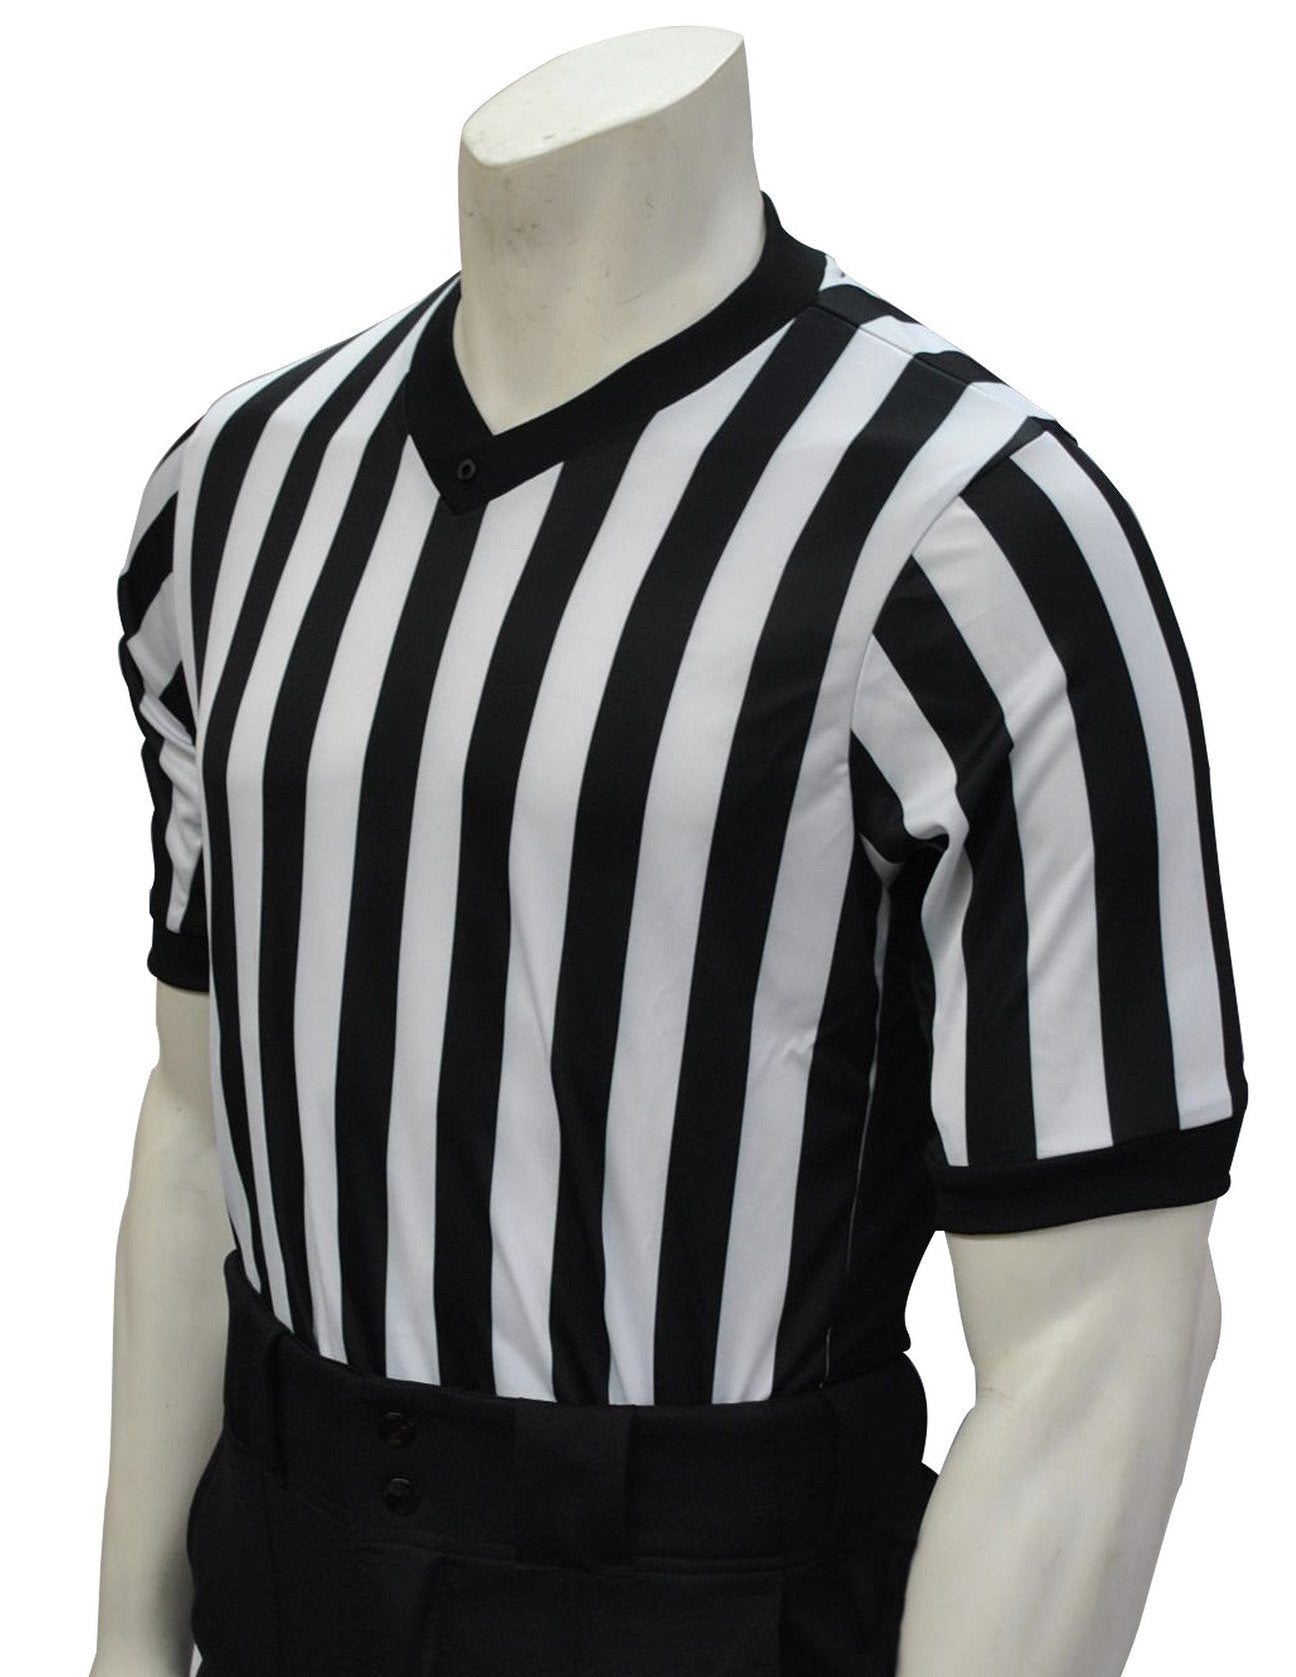 USA201-607 NF - Smitty "Made in USA" - "BODY FLEX" Men's Basketball V-Neck Shirt w/ Side Panel - No Flag